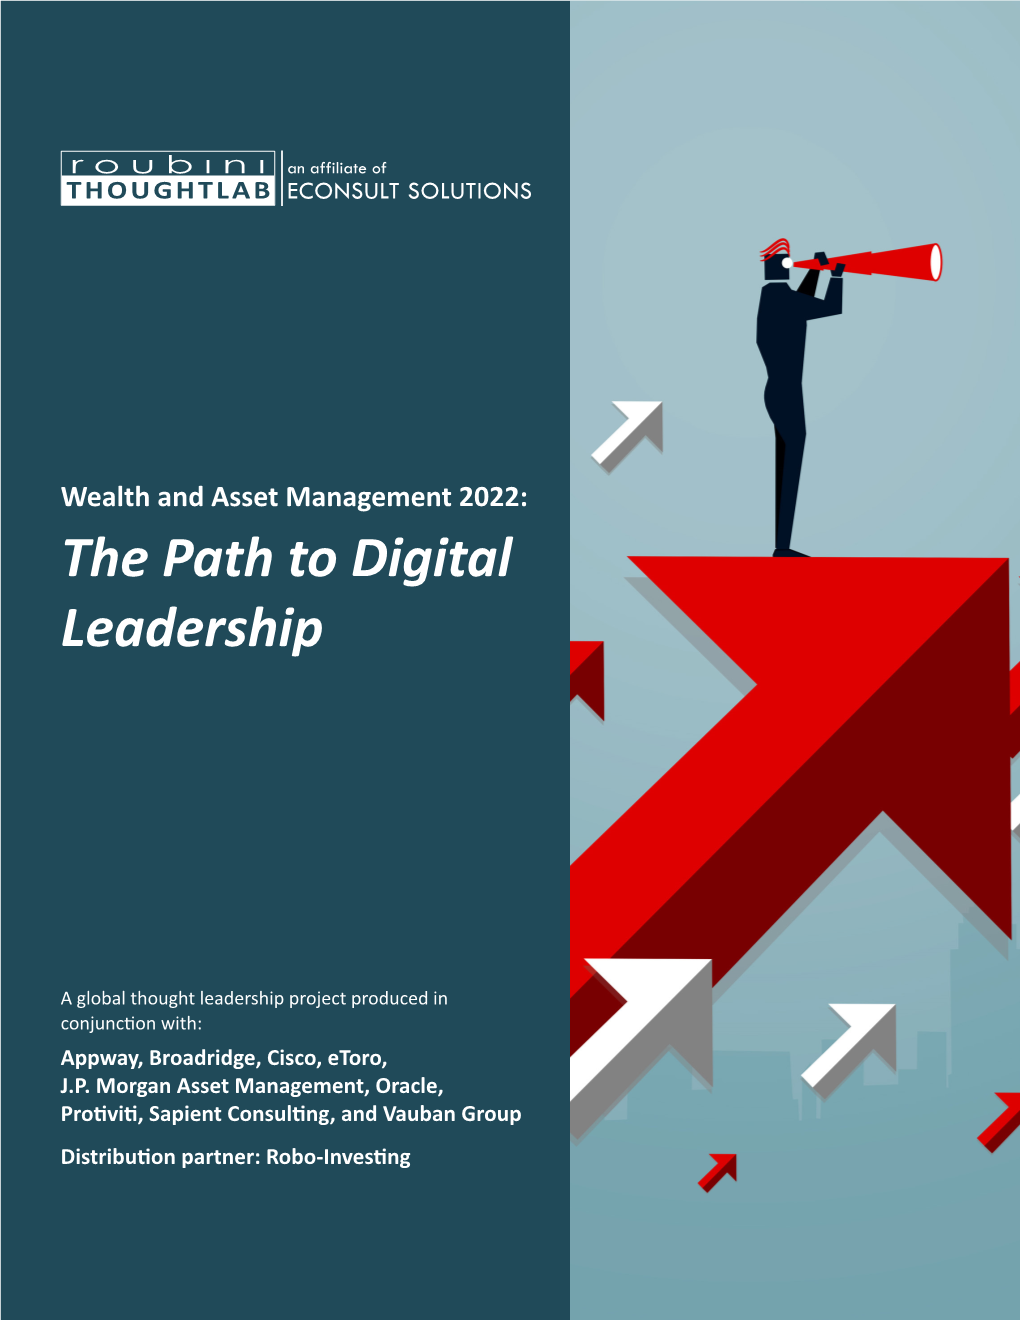 The Path to Digital Leadership